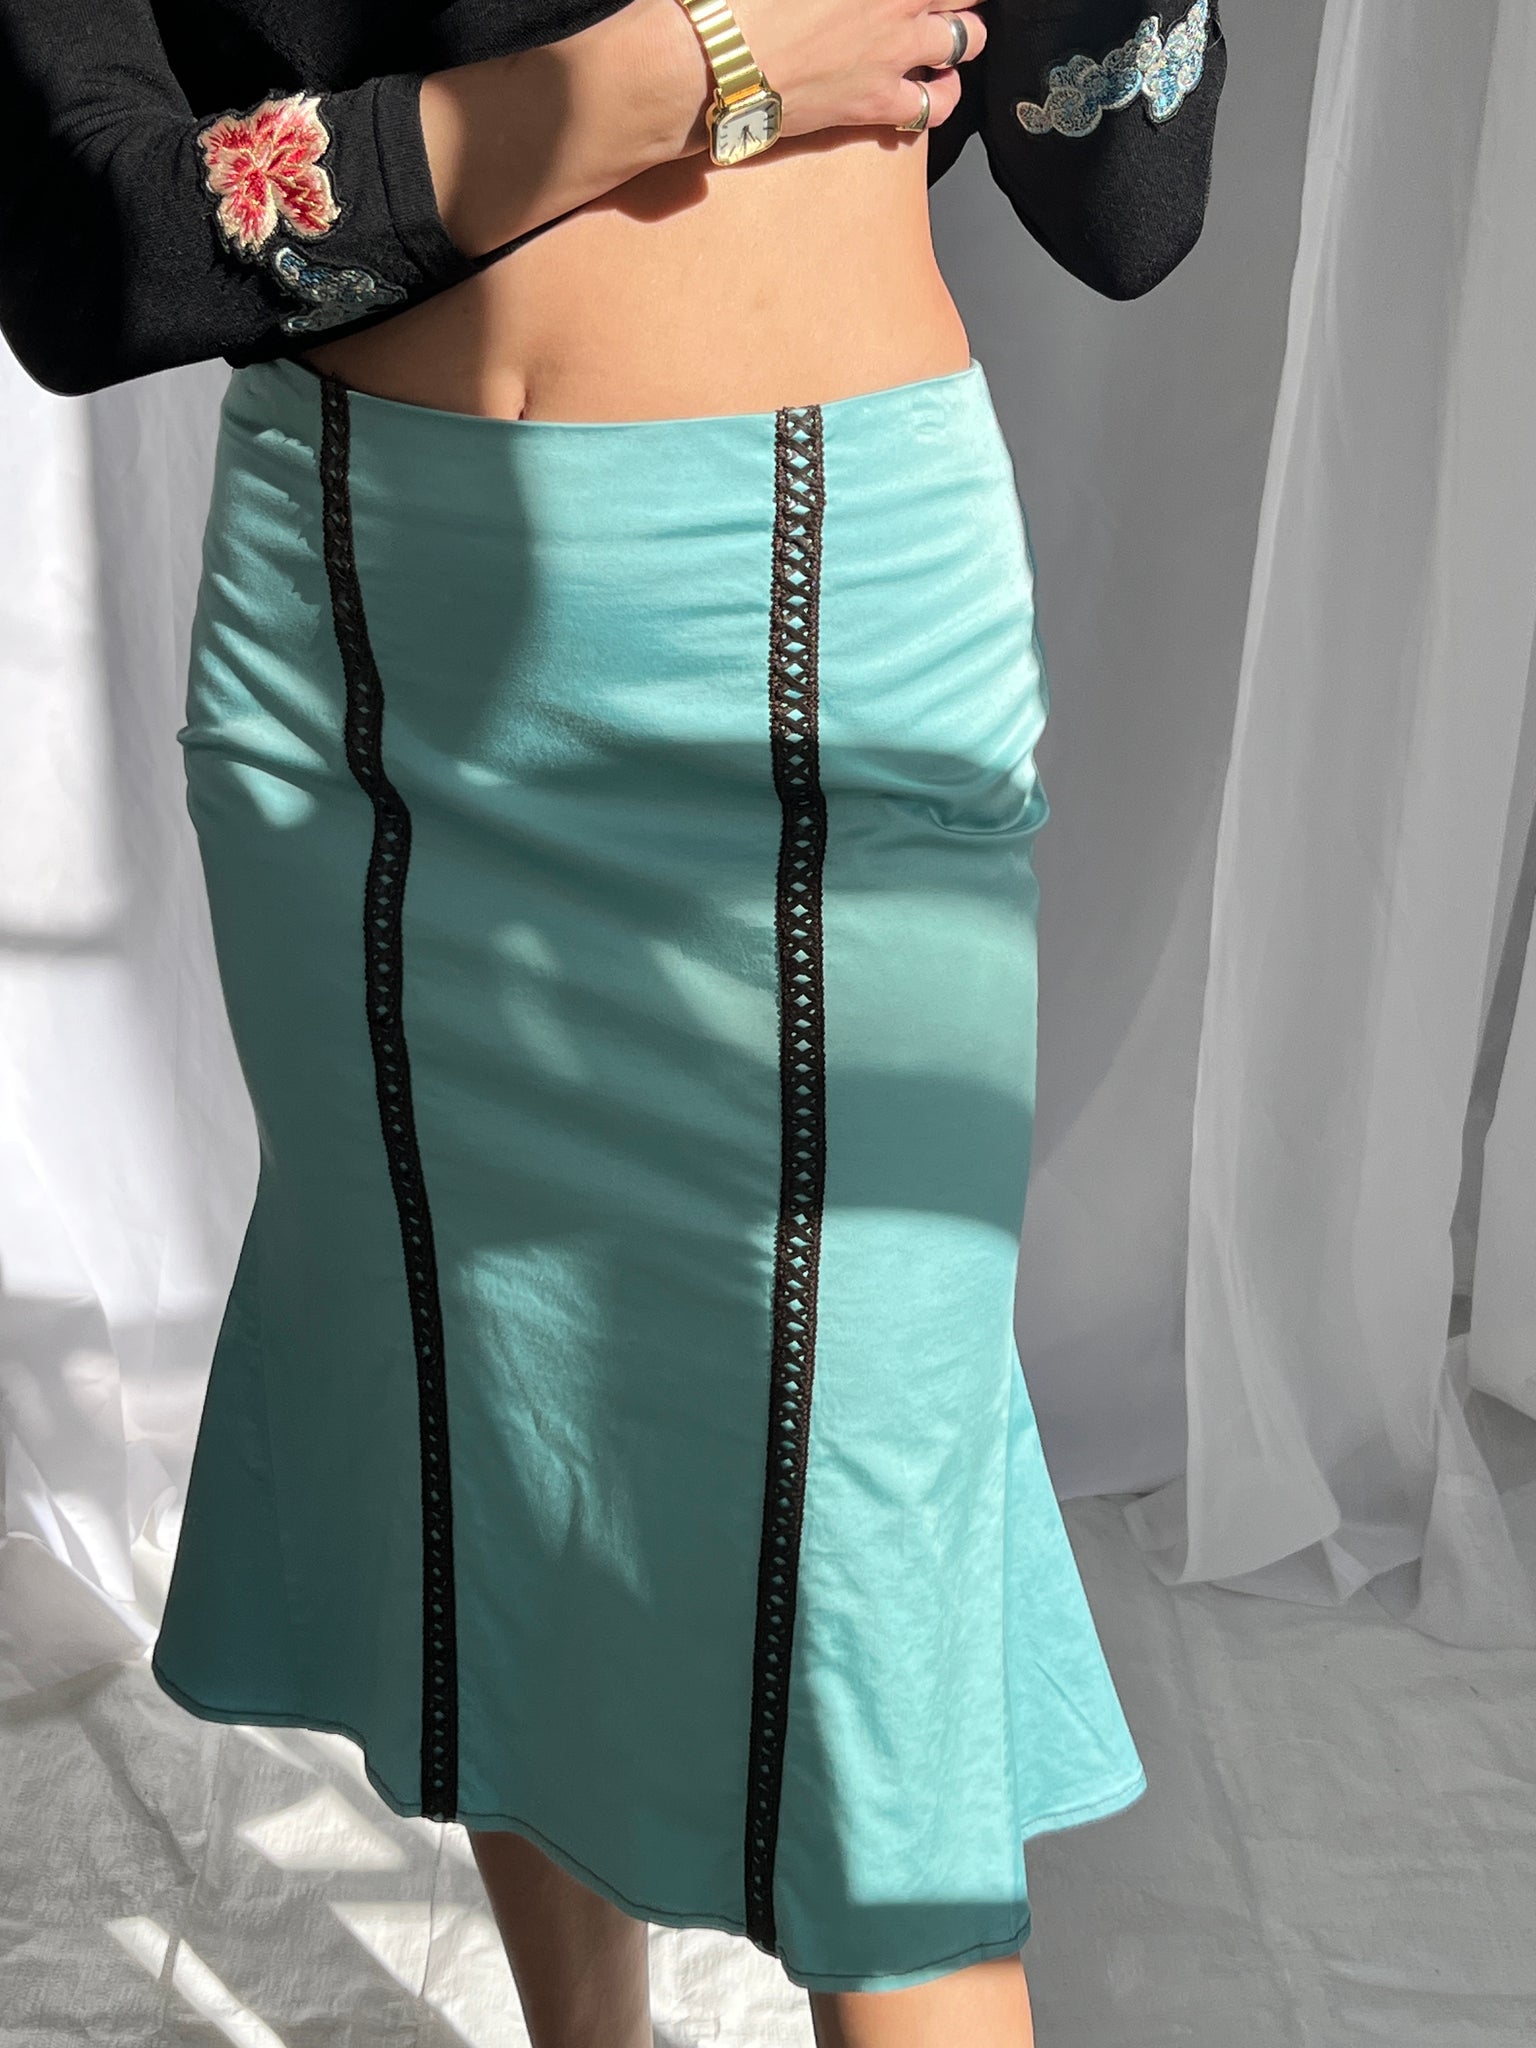 Roberto Cavalli Mini Mermaid Skirt, 2000s